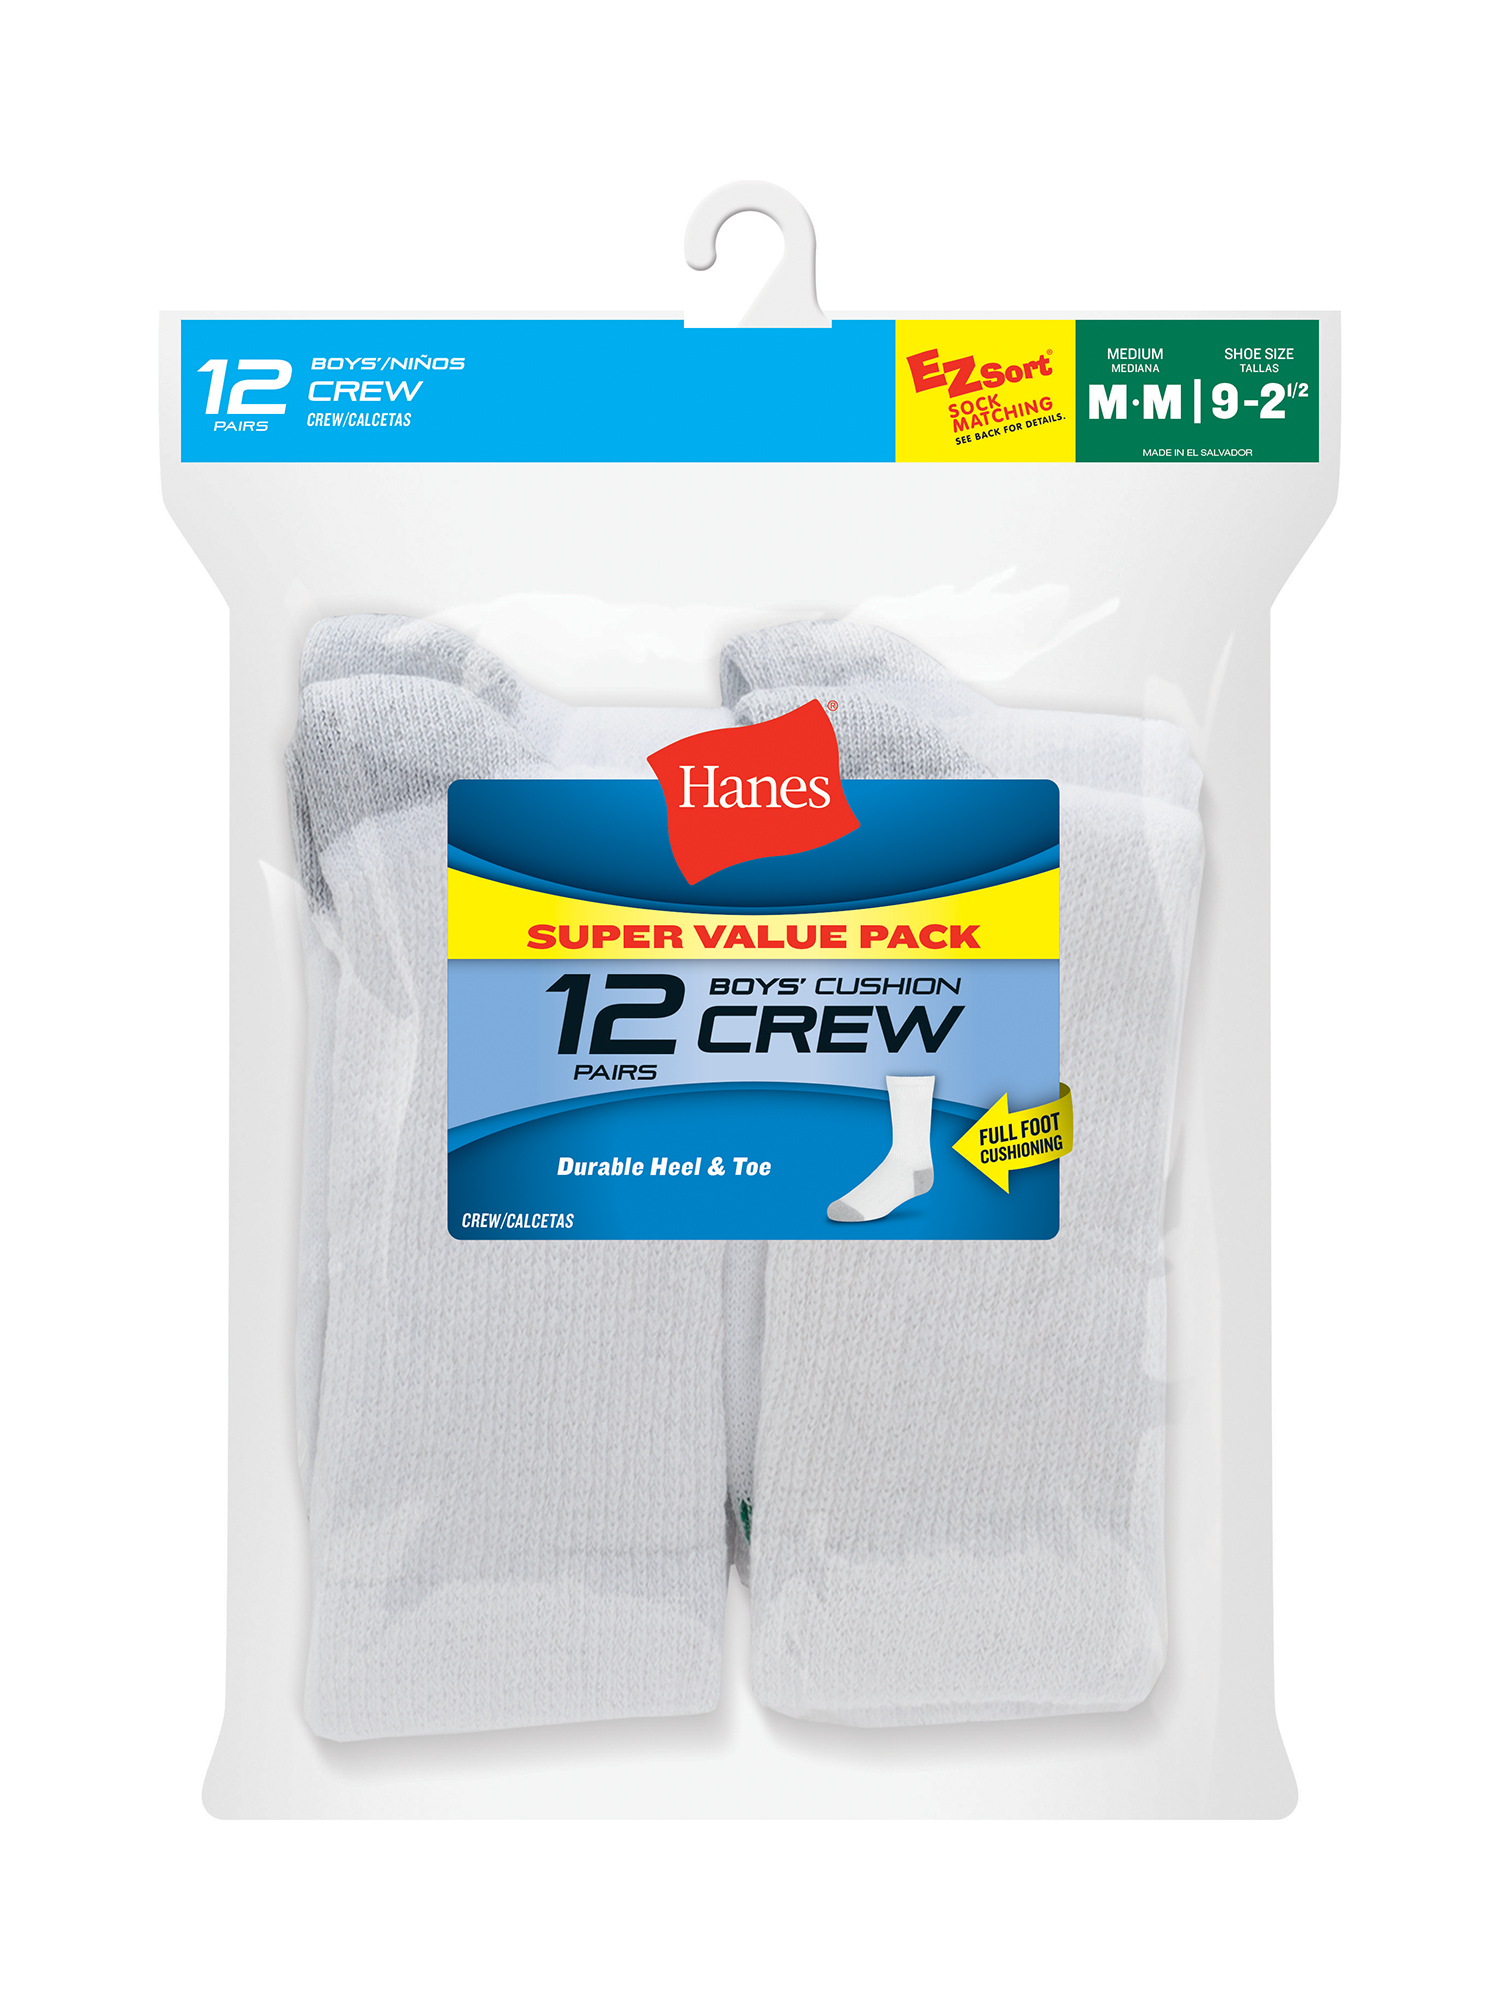 Hanes Boys' Crew Socks, 12 Pack - image 4 of 5